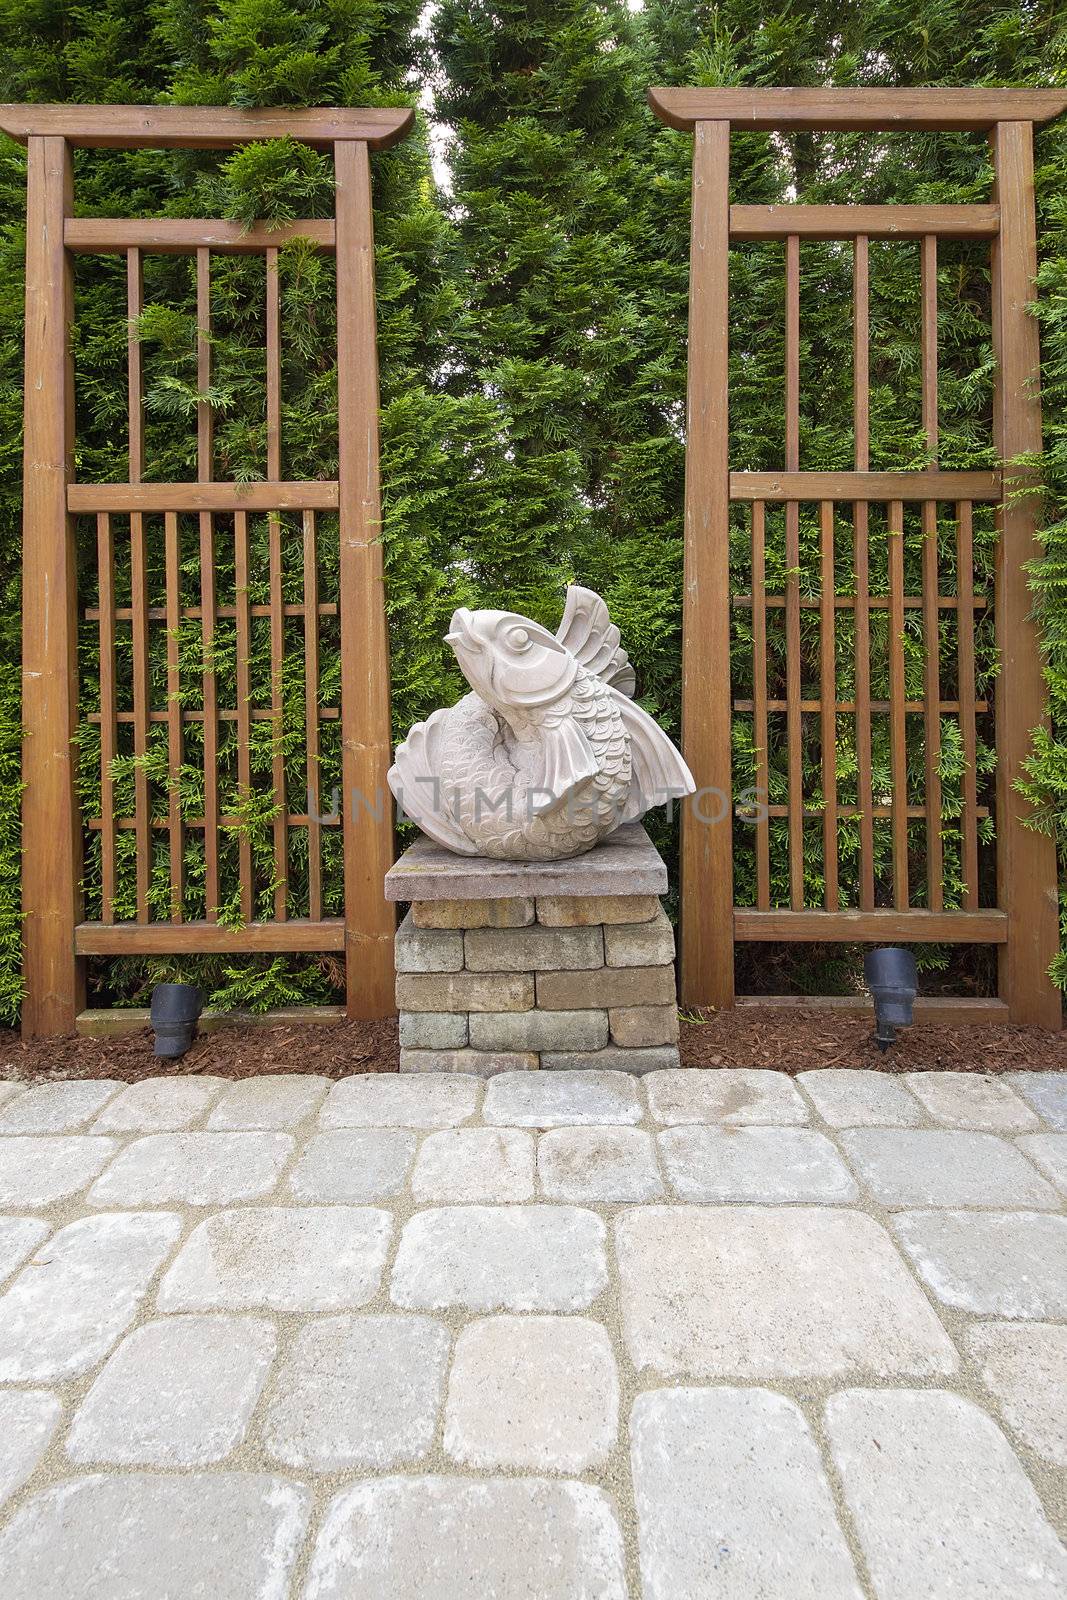 Asian Koi Fish Stone Sculpture in Garden Backyard Paver Patio with Trellis Background